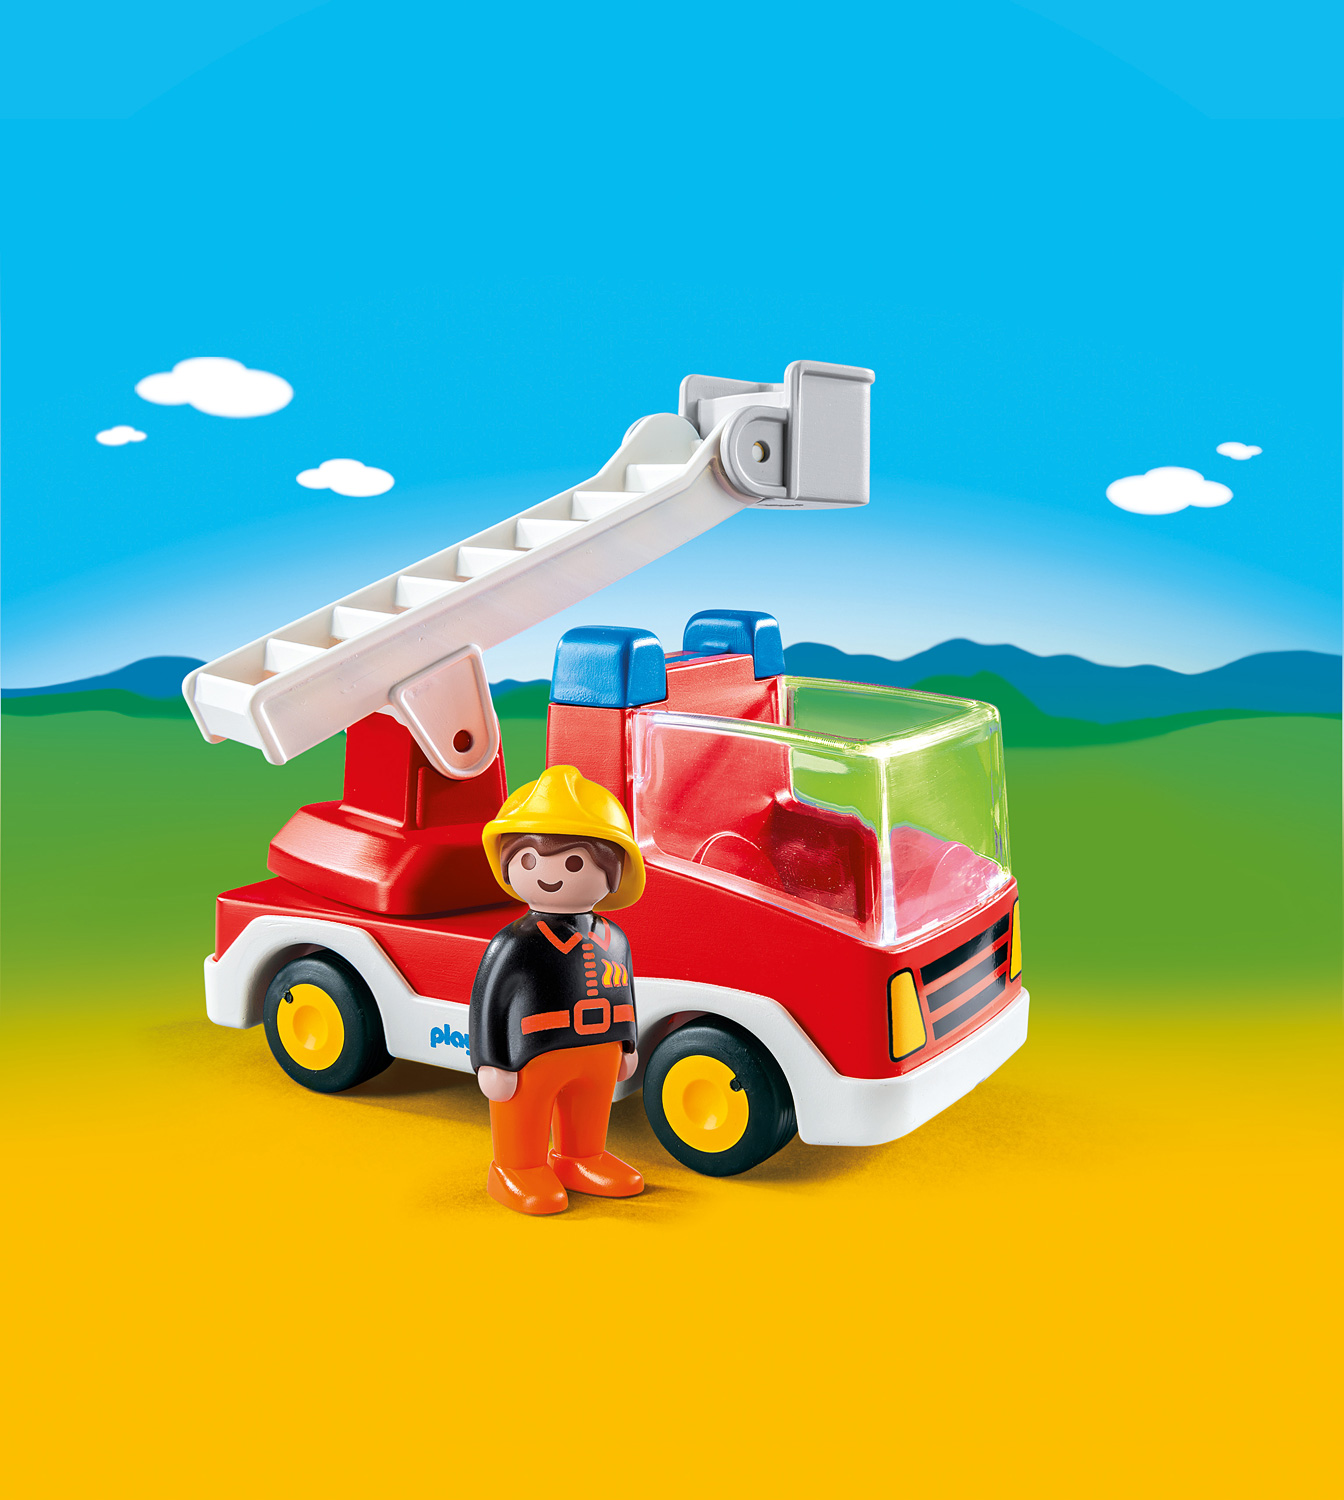 Microbe report private 123 Ladder Unit Fire Truck - Kiddlestix Toys